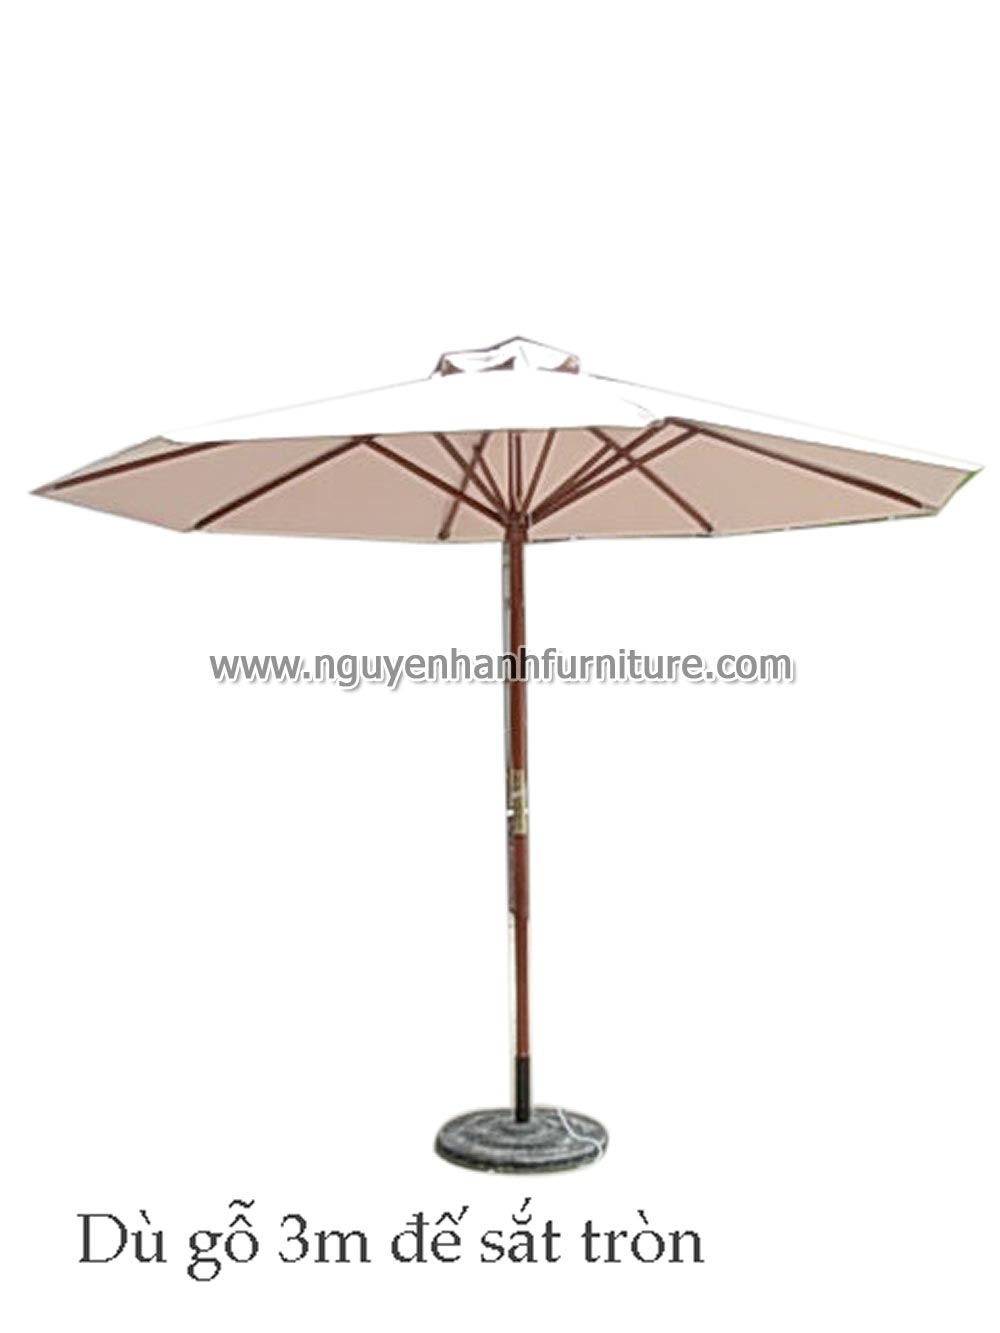 Name product: Wooden umbrella with round iron base